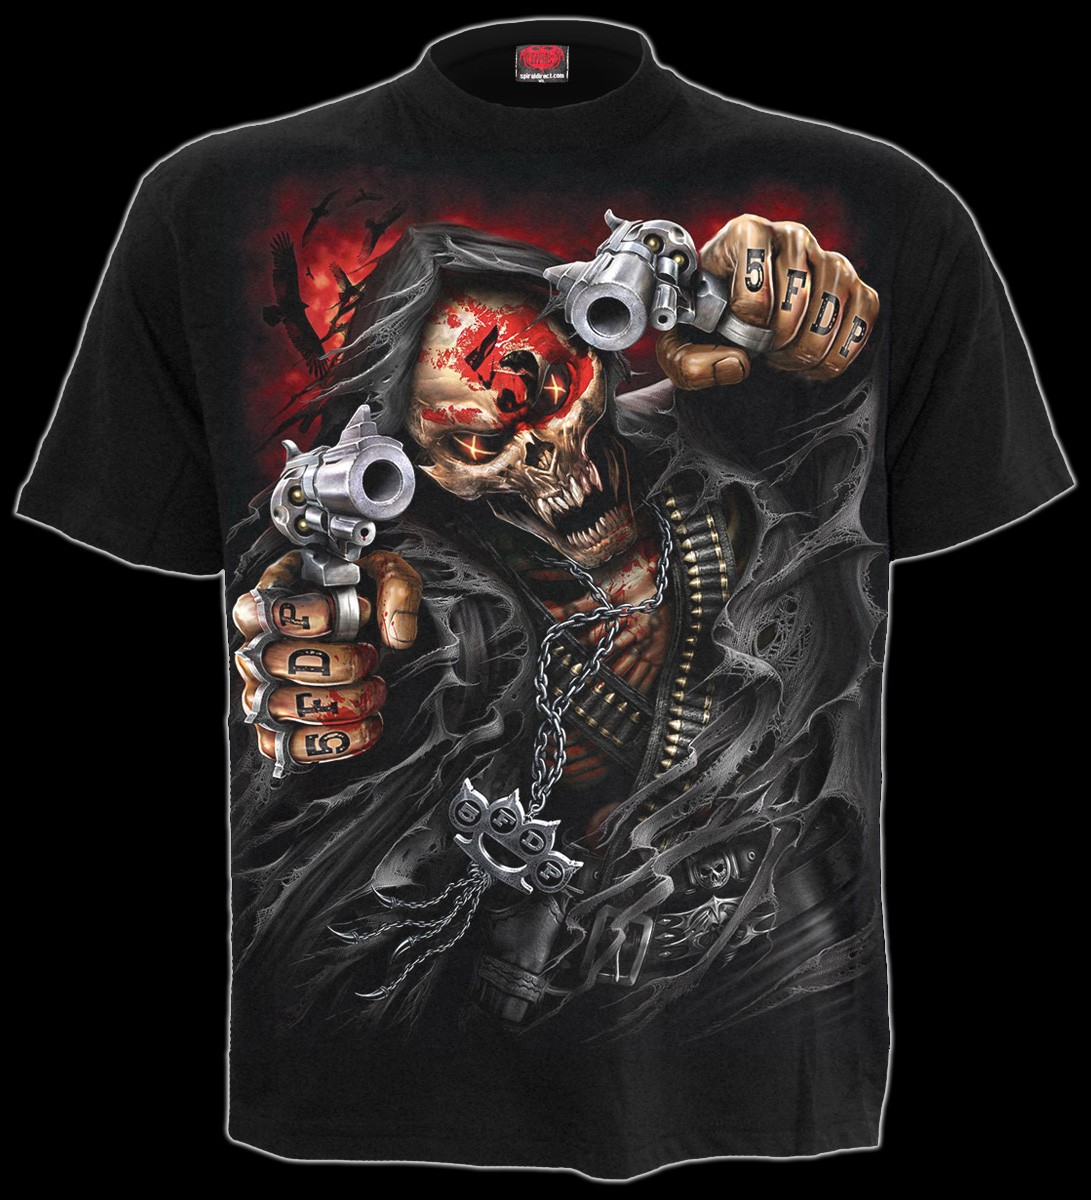 Five Finger Death Punch T-Shirt - 5FDP Assassin